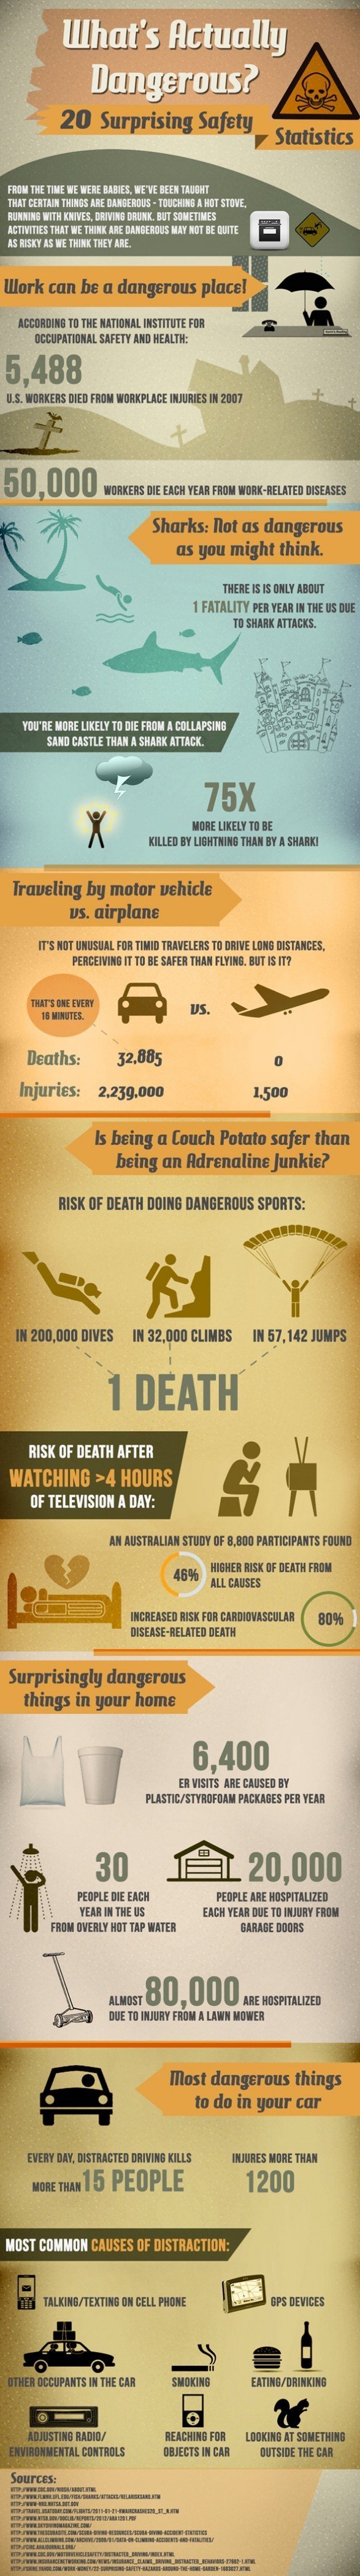 safety statistics